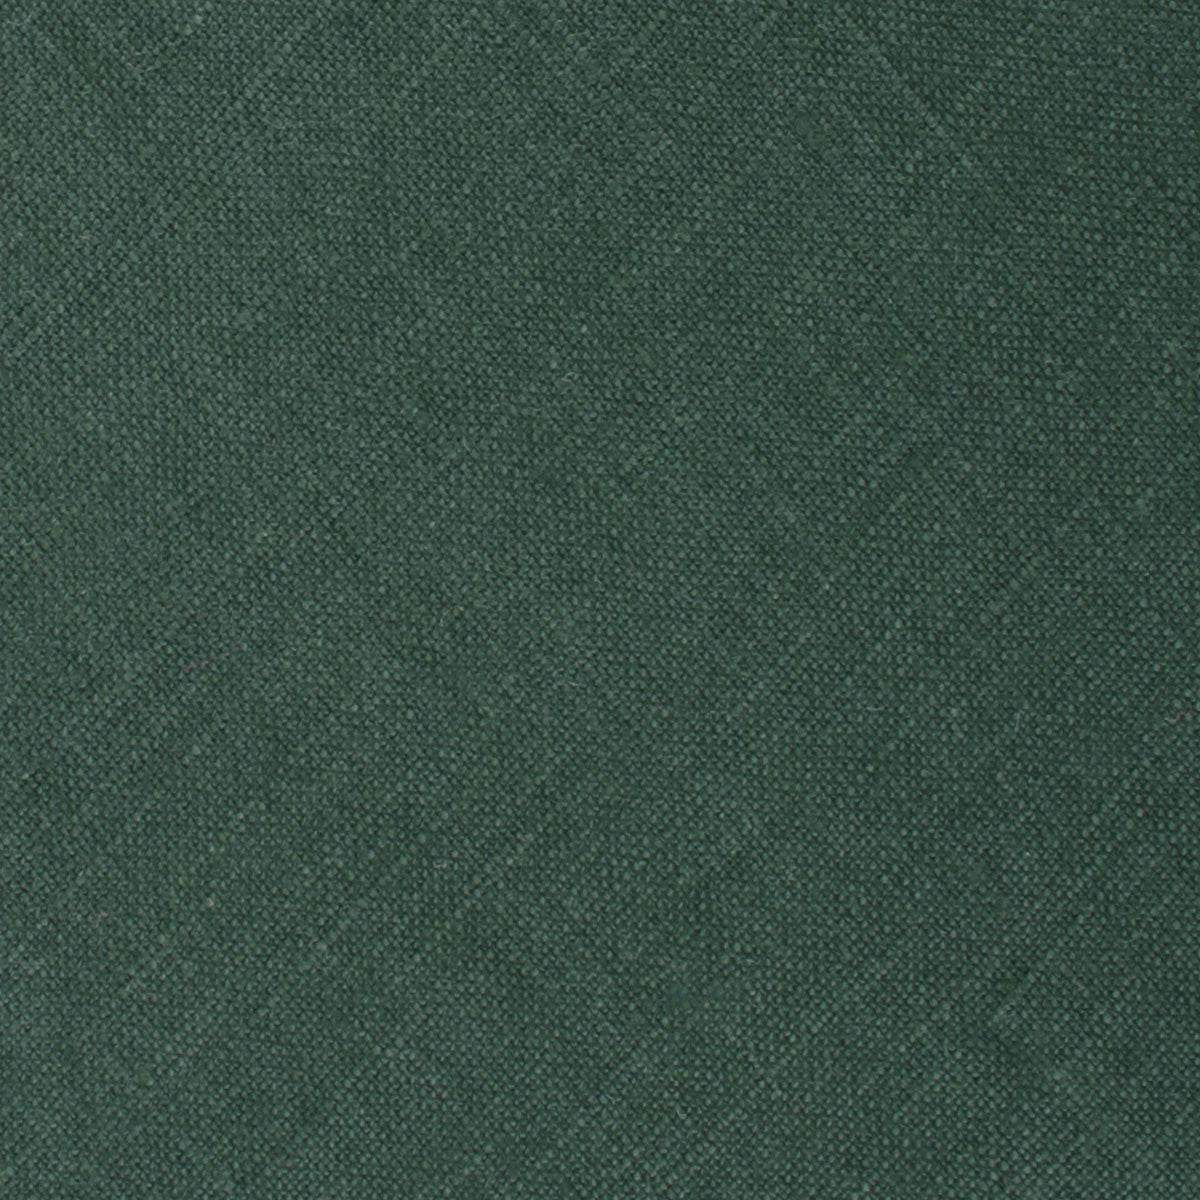 Dusty Emerald Green Linen Self Bow Tie Fabric